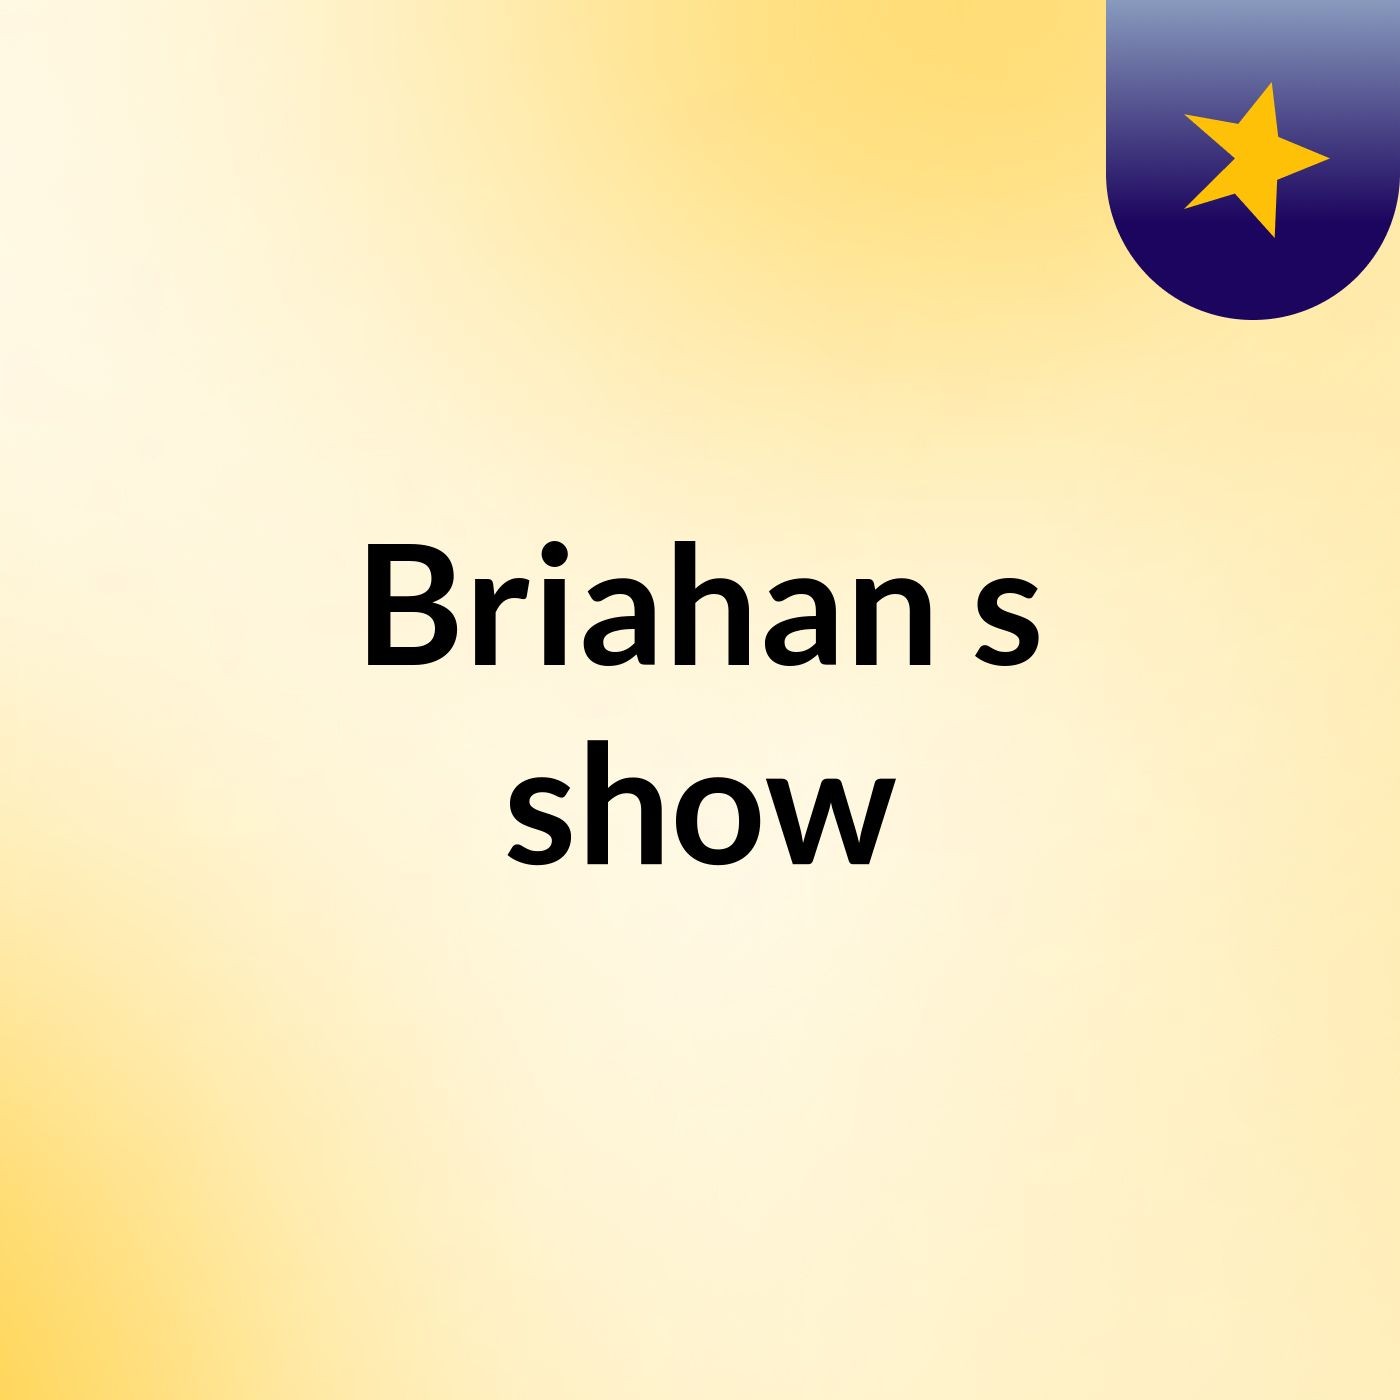 Briahan's show